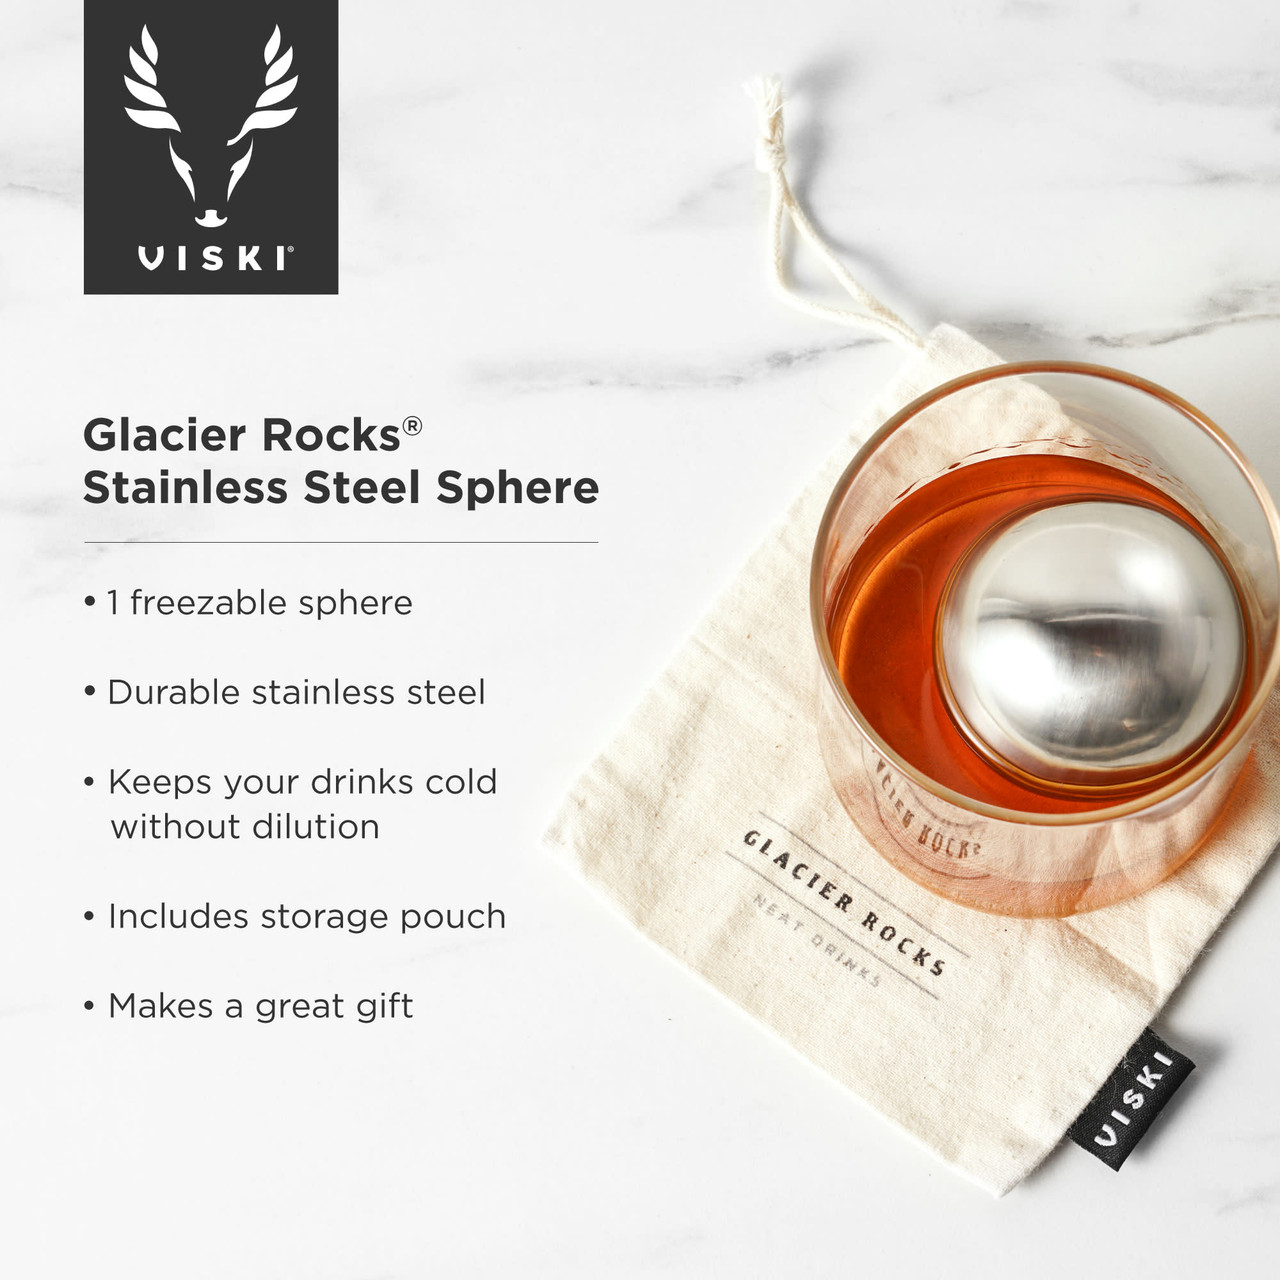 Glacier Rocks® Stainless Steel Sphere by Viski®